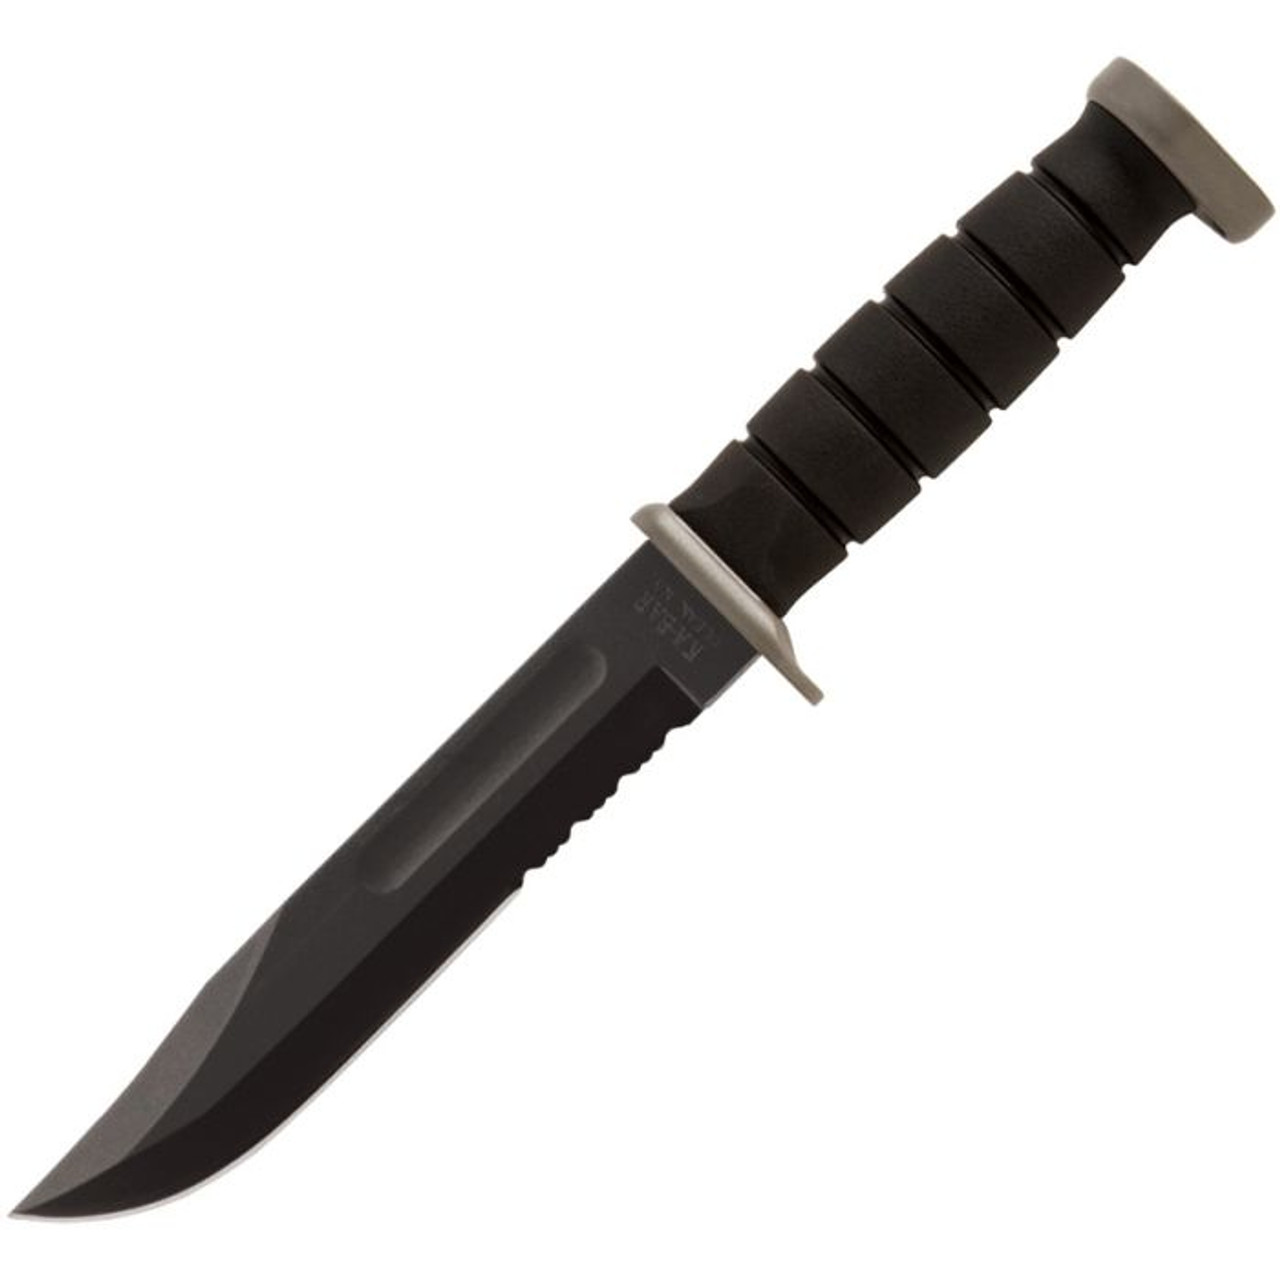 Ka-Bar Extreme (KA1282) 7" D2 Black Clip Point Partially Serrated Blade, Black Kraton Handle with Carbon Steel Guard and Pommel, Black Nylon Belt Sheath